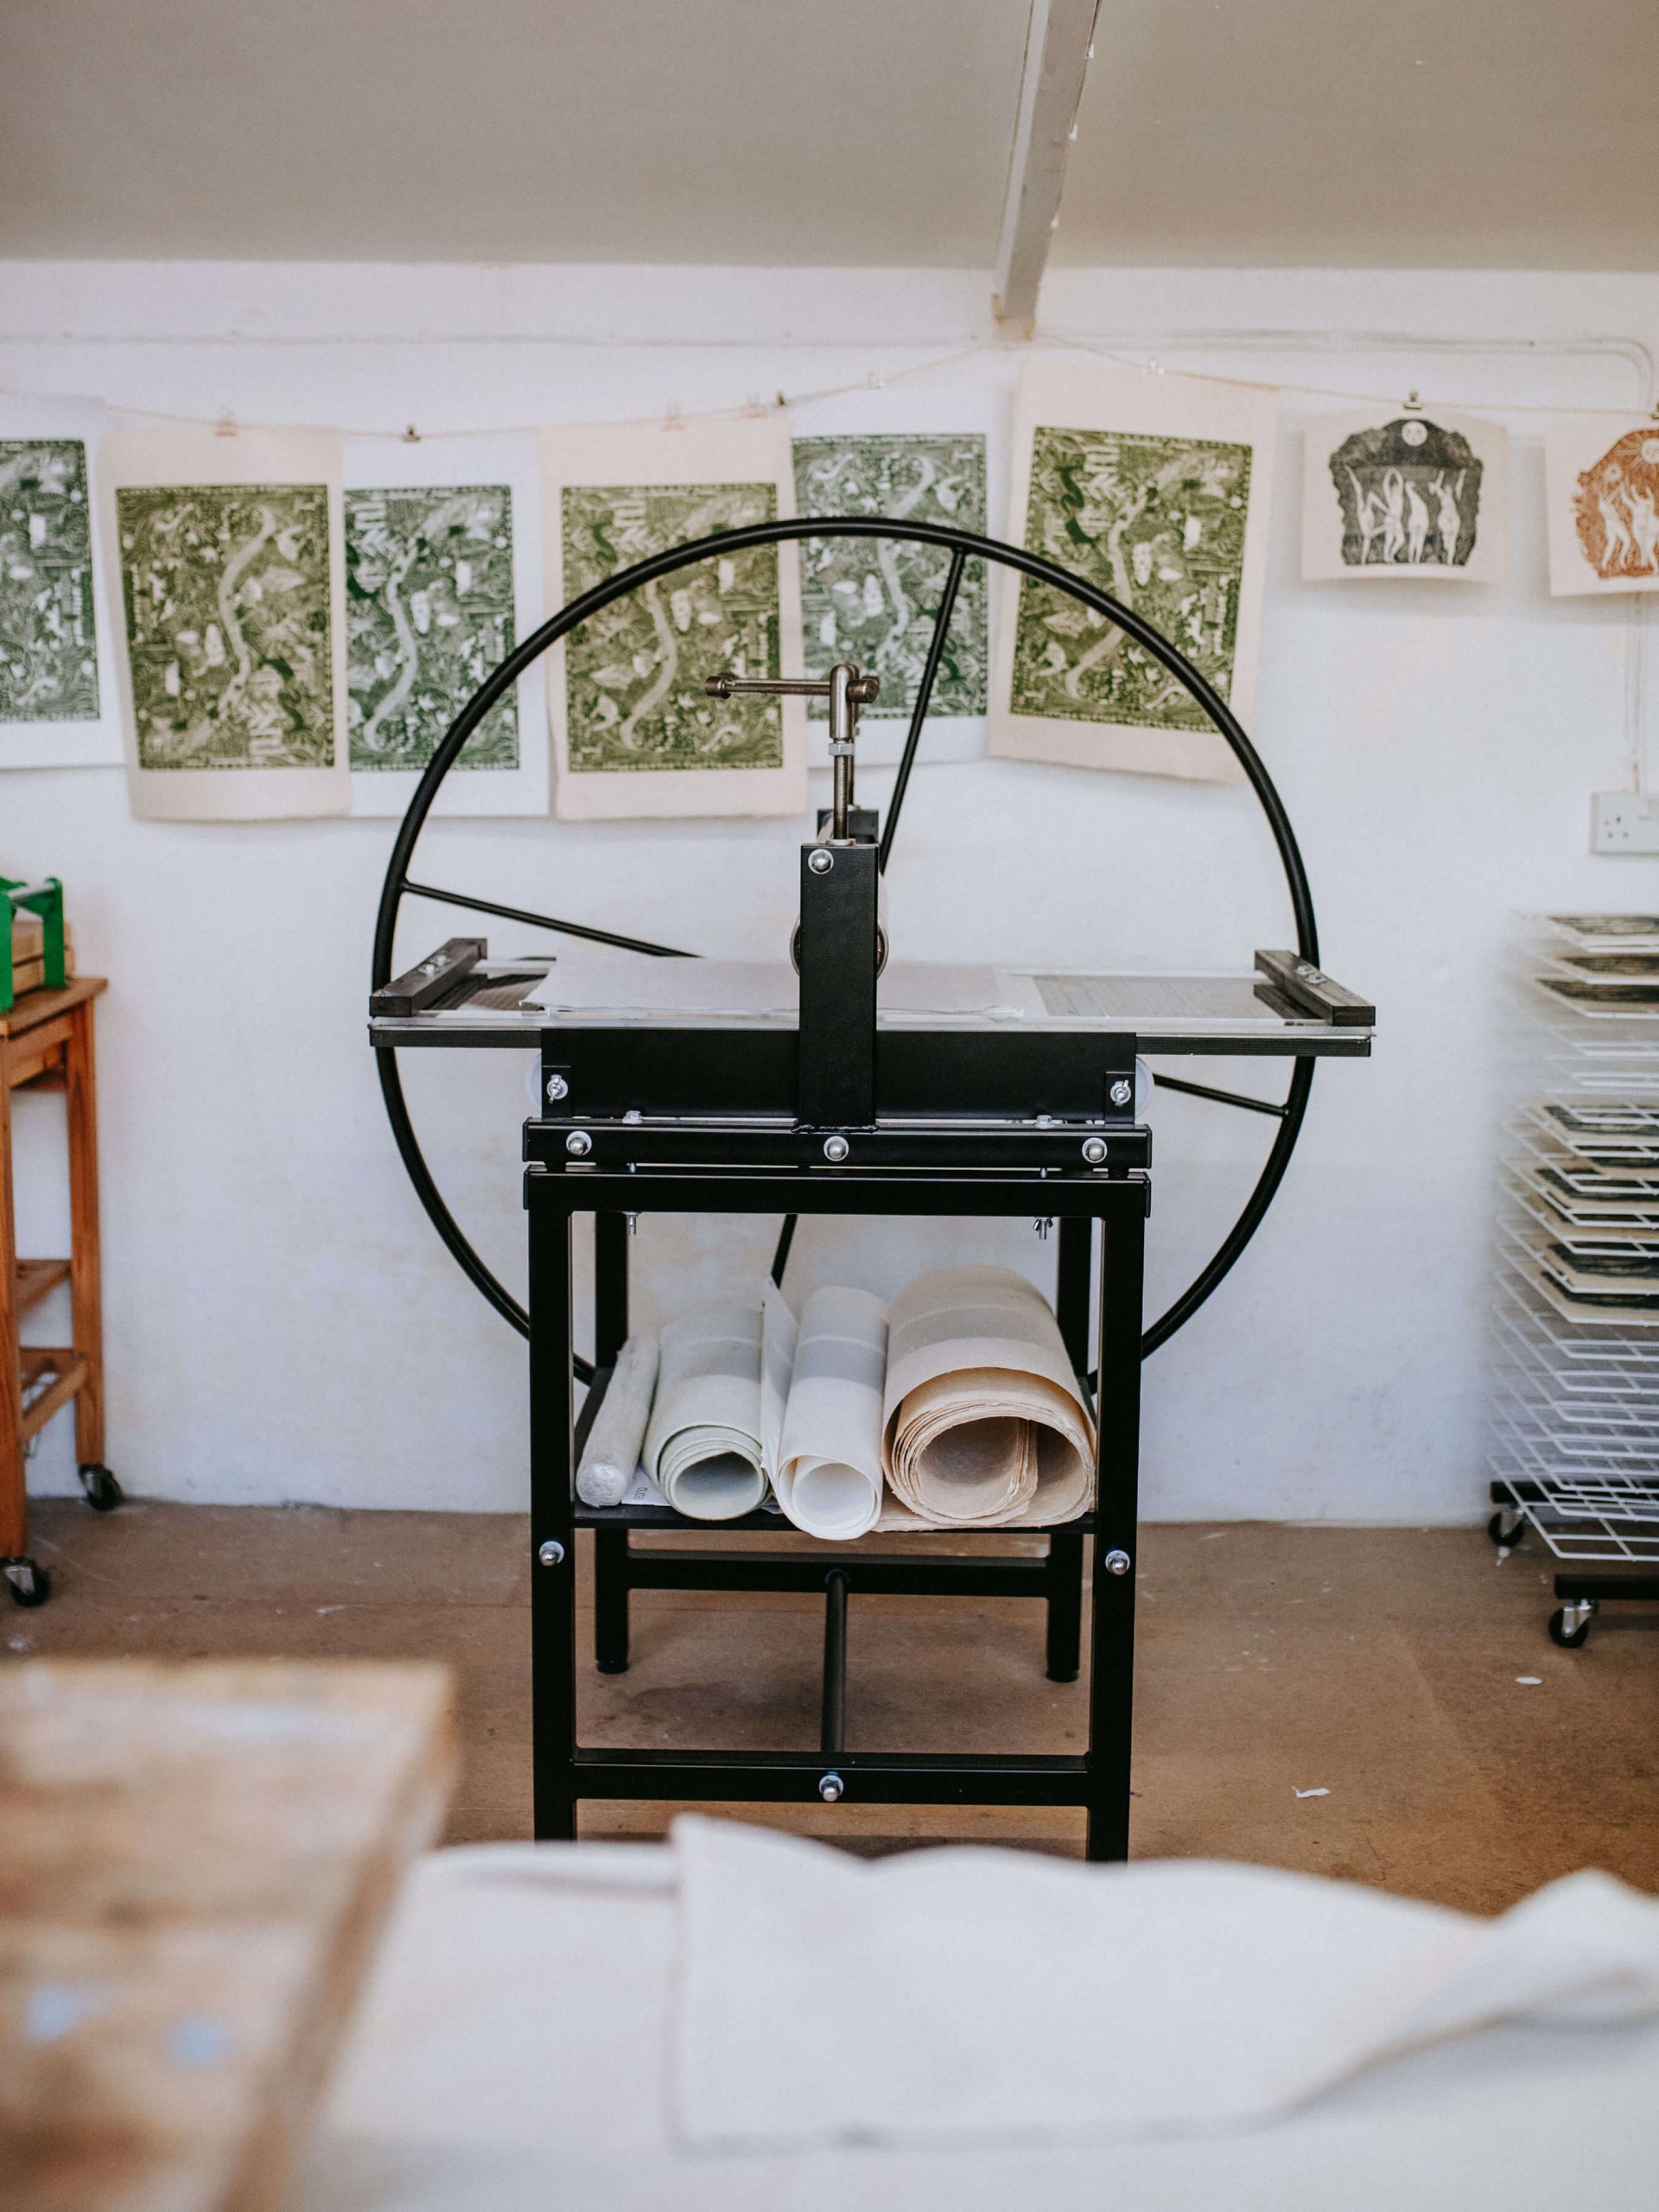 Nicole Purdie of Prints By The Bay linoprinting in her Dorset studio